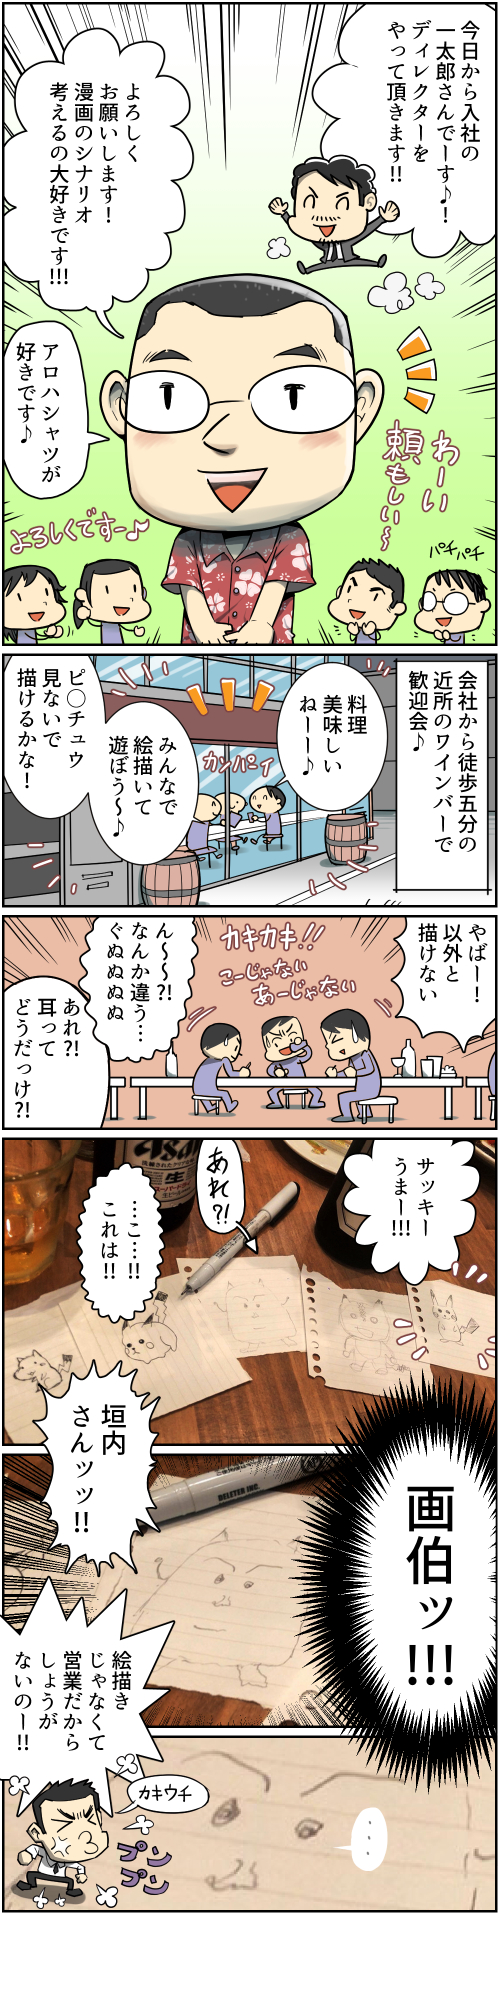 weekly_comic_23_taro.jpg